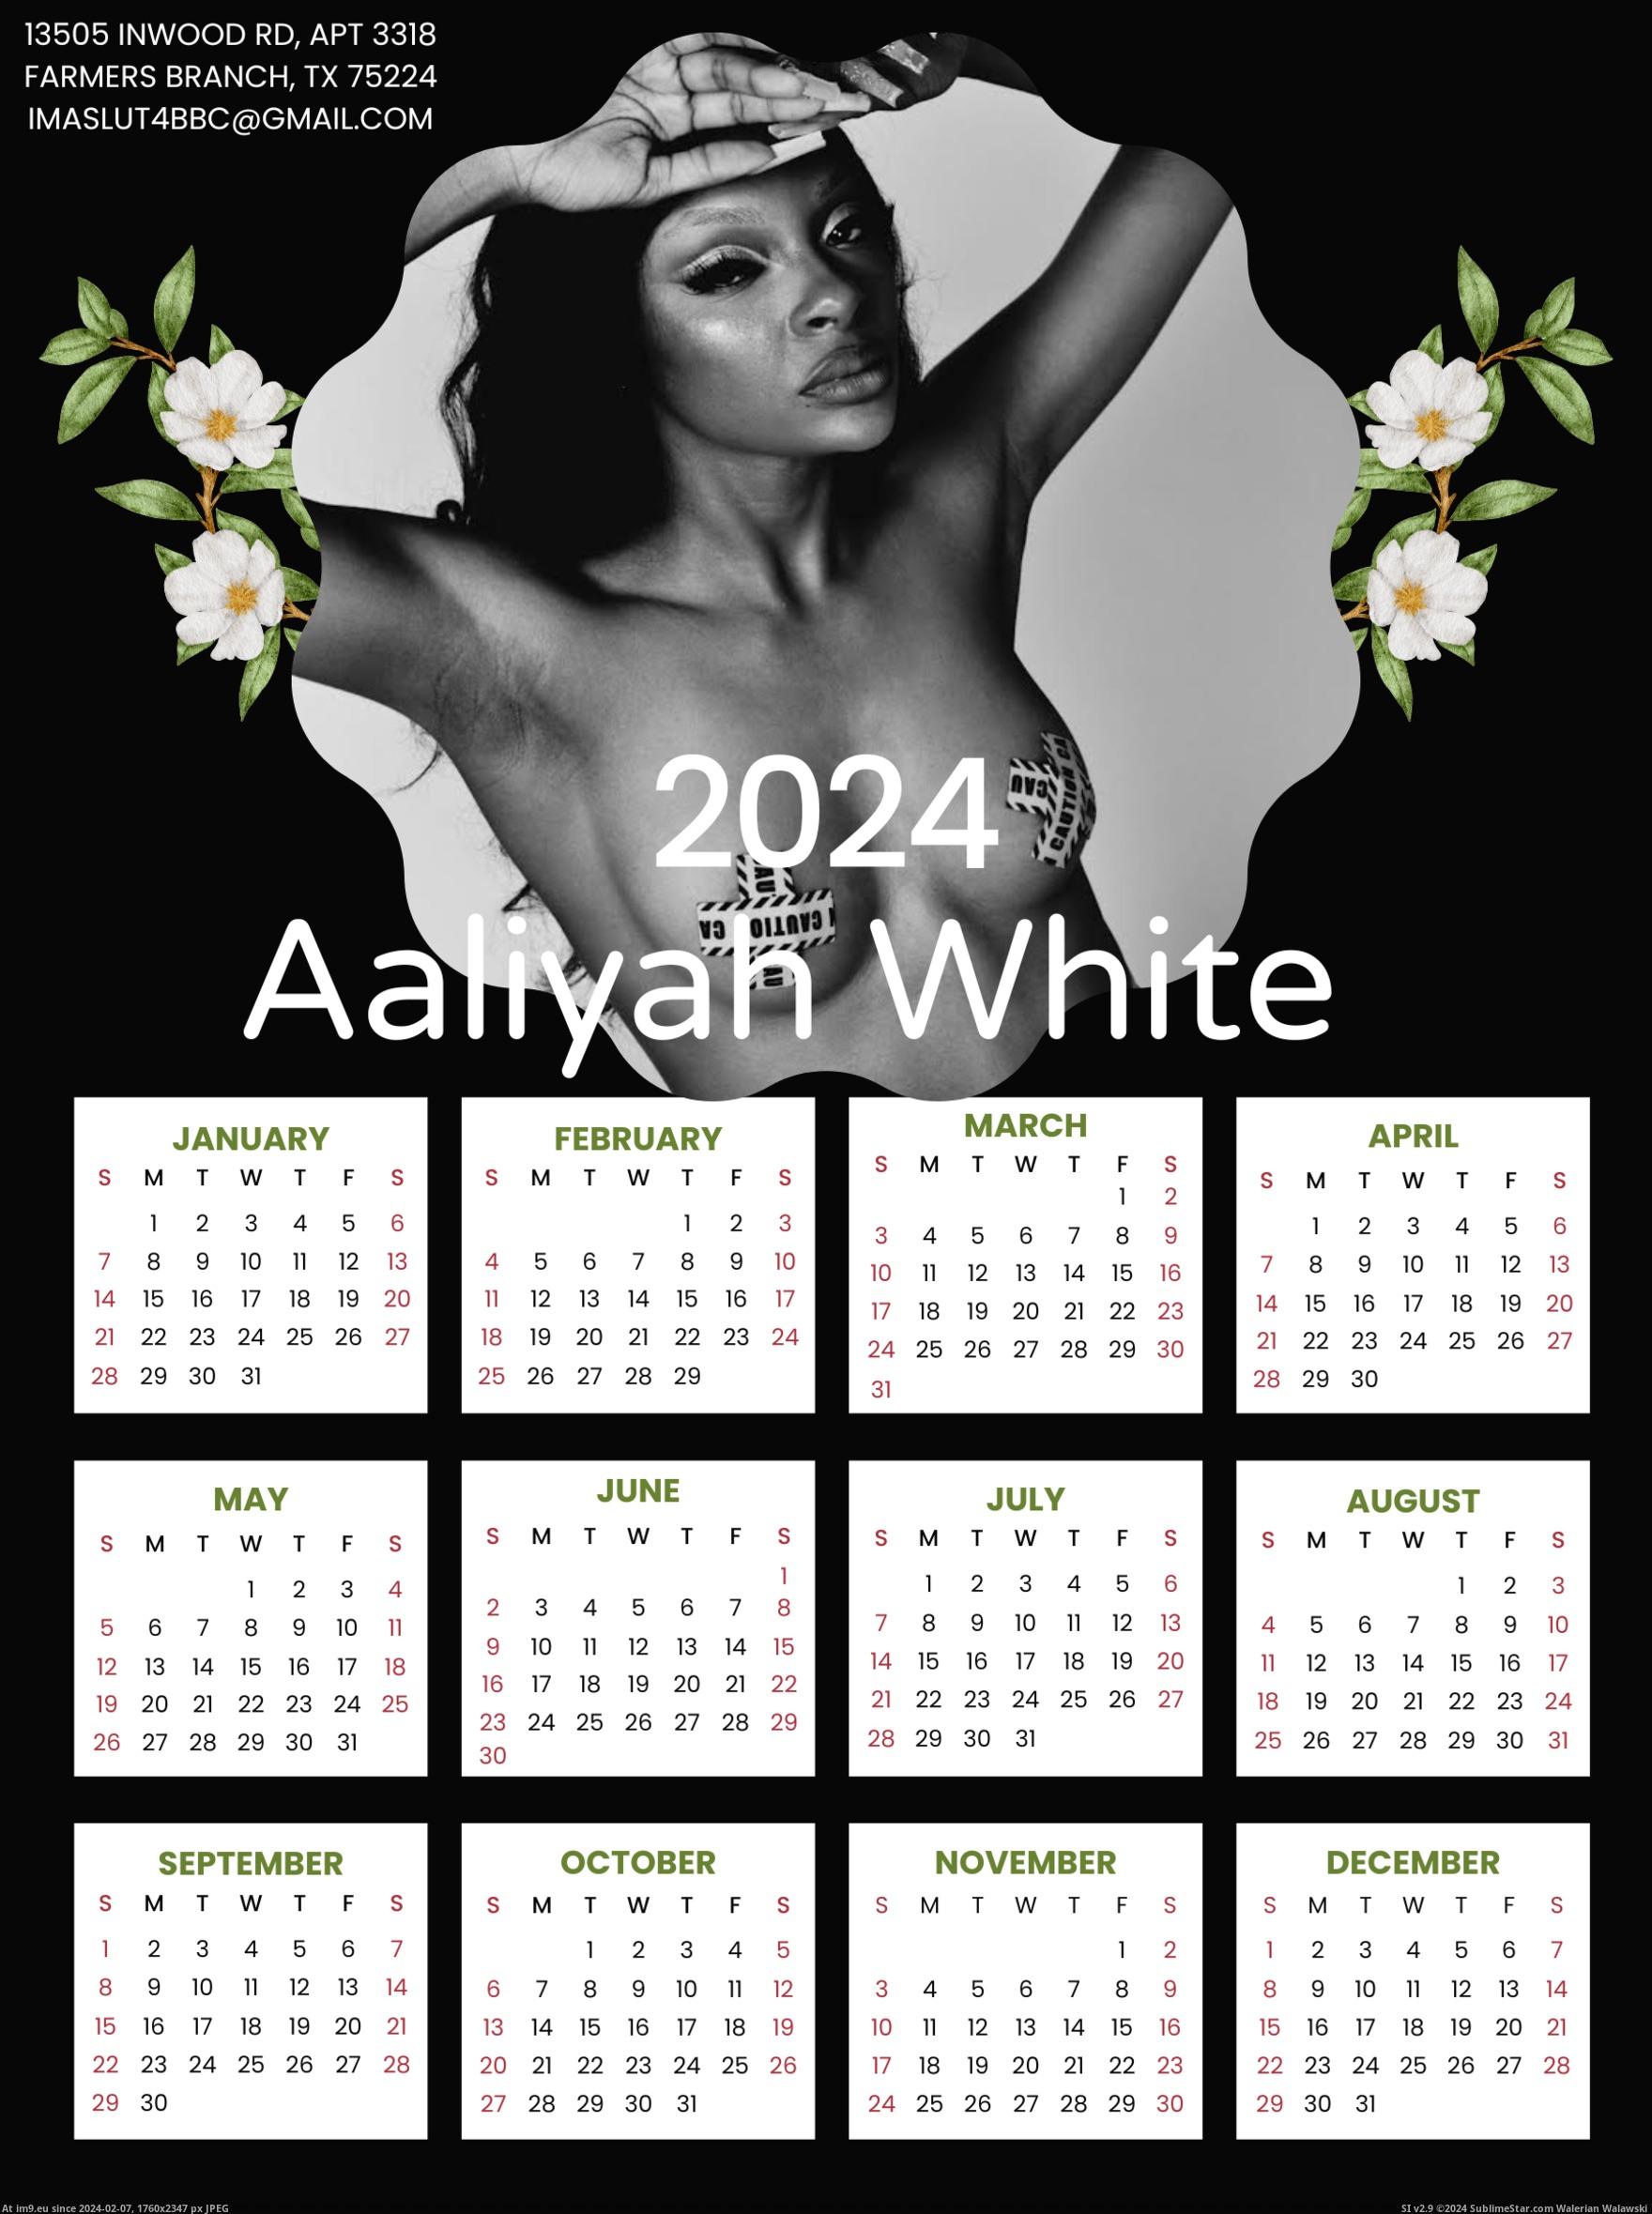 #Tits #Amateur #Photo #Calendar #Beige #Black #Nudes #Green Beige And Green Photo 2024 Calendar (7) Pic. (Image of album Aaliyah White Free Use Nigger Slut))